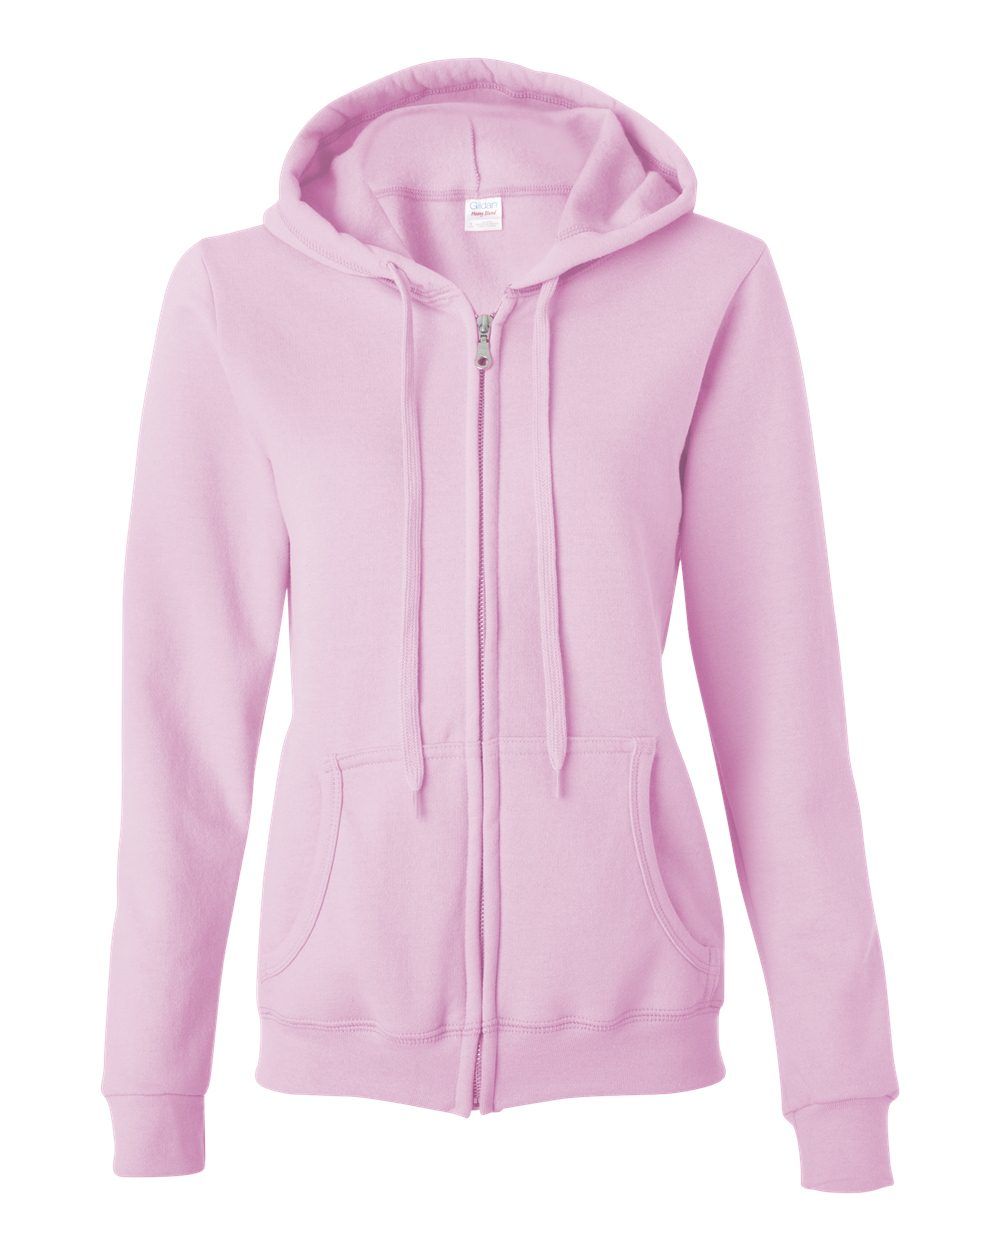 Heavy Blend Missy Fit Full-Zip Hooded Sweatshirt Women's Hoodie 18600FL Gildan